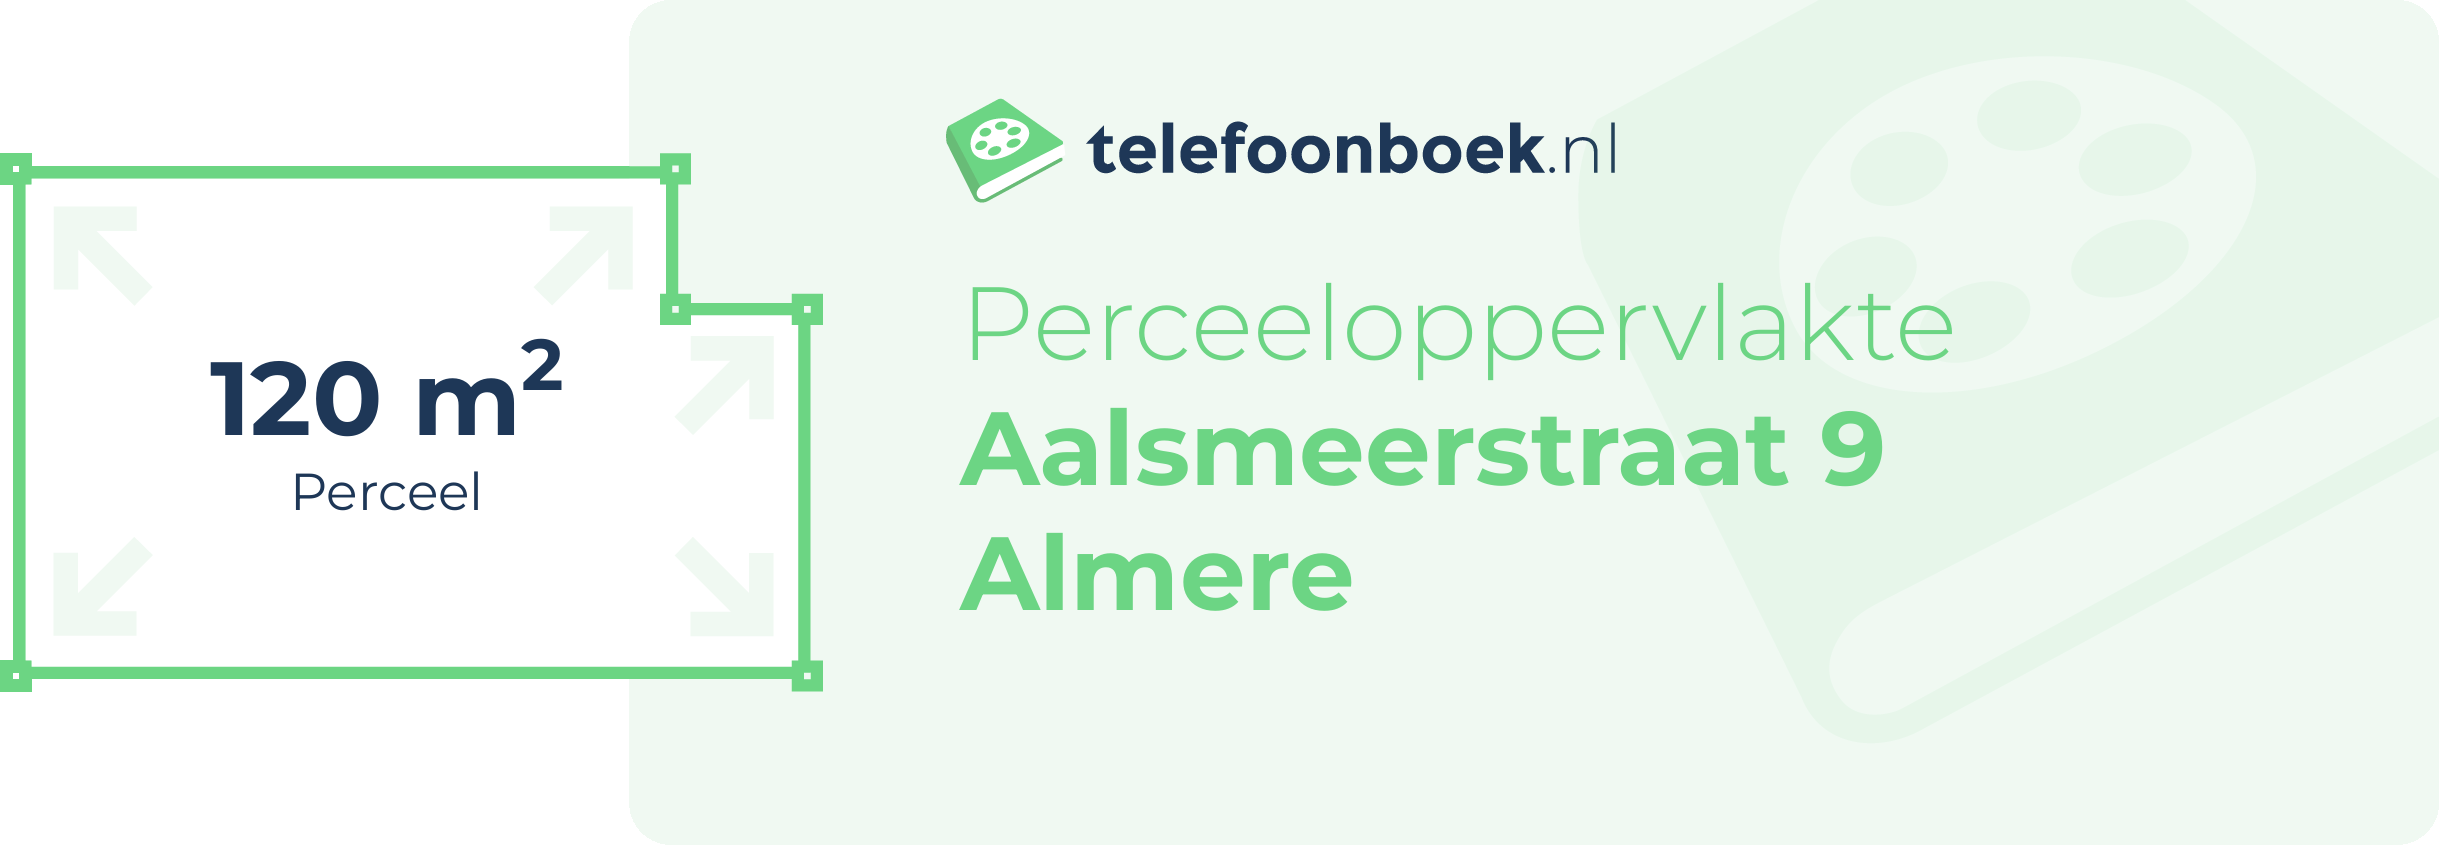 Perceeloppervlakte Aalsmeerstraat 9 Almere